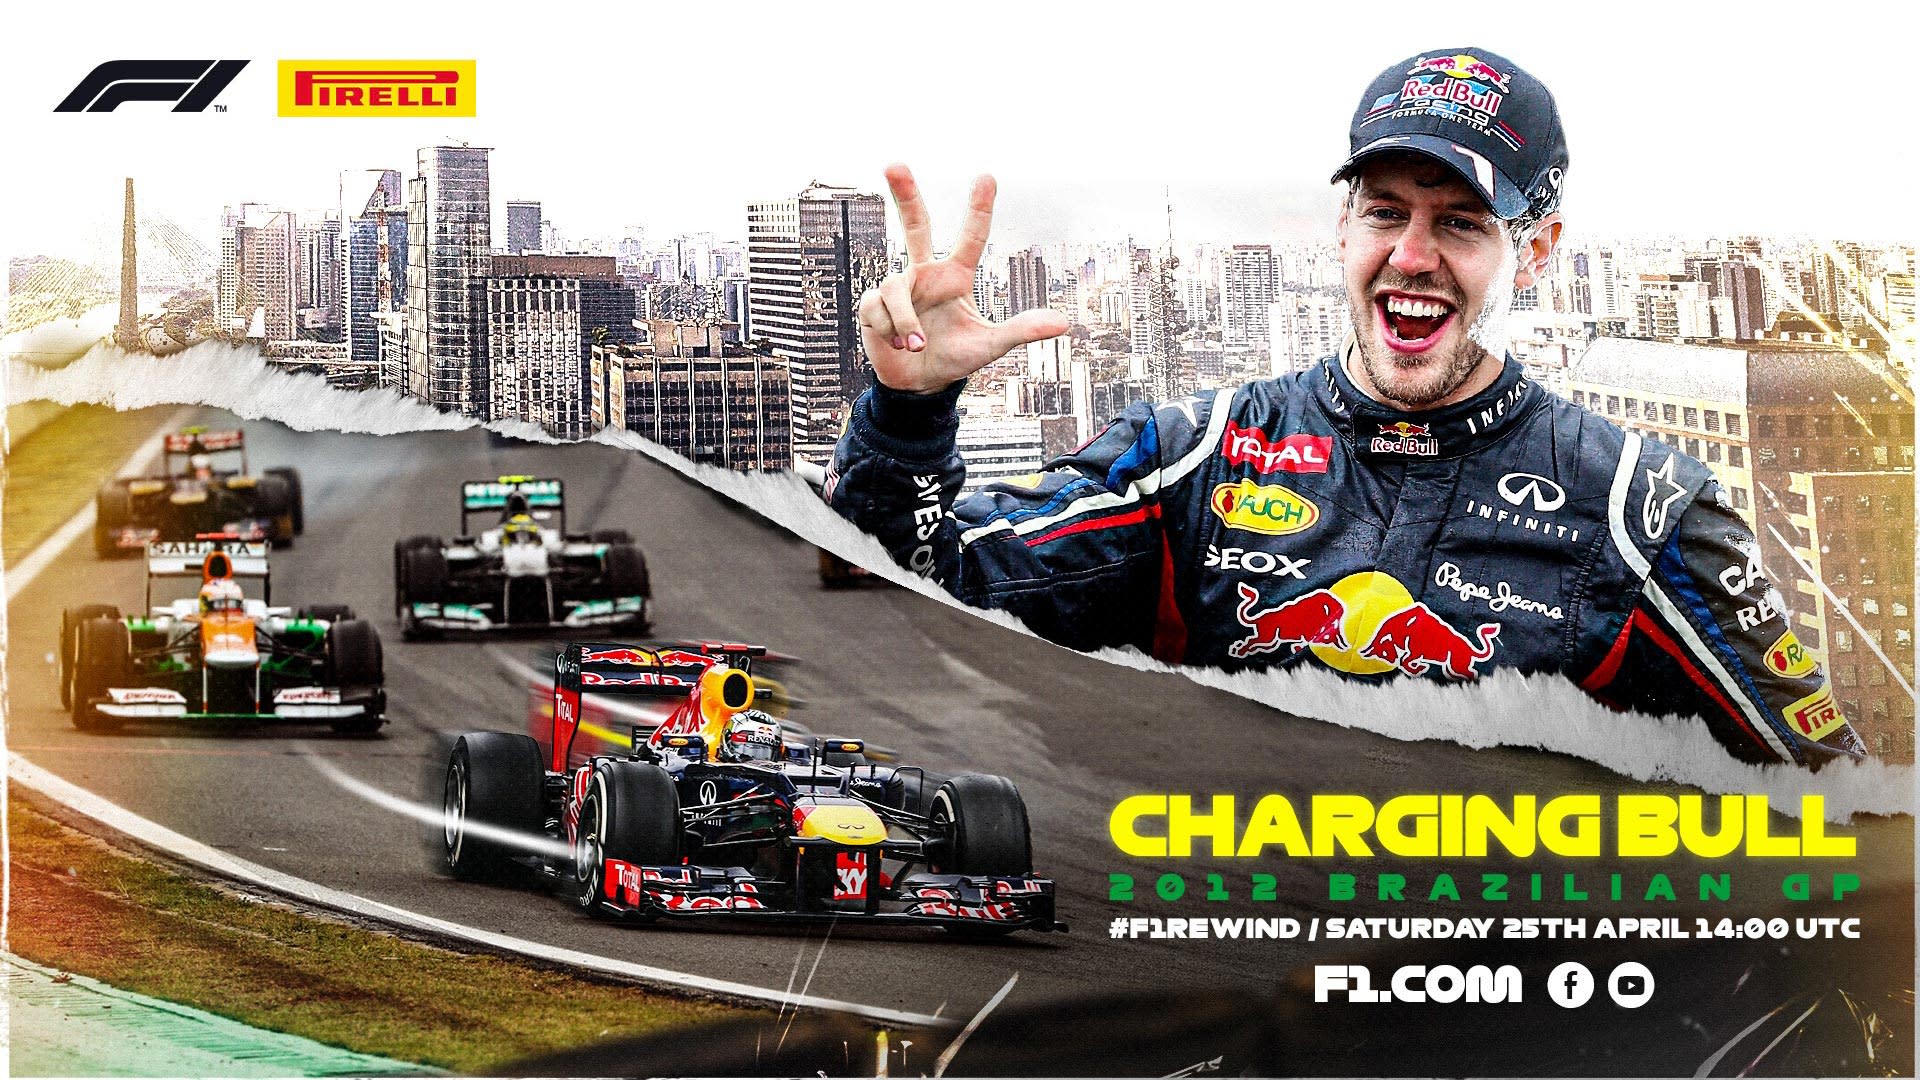 2012 Formula 1 World Championship kicks off with Australian Grand